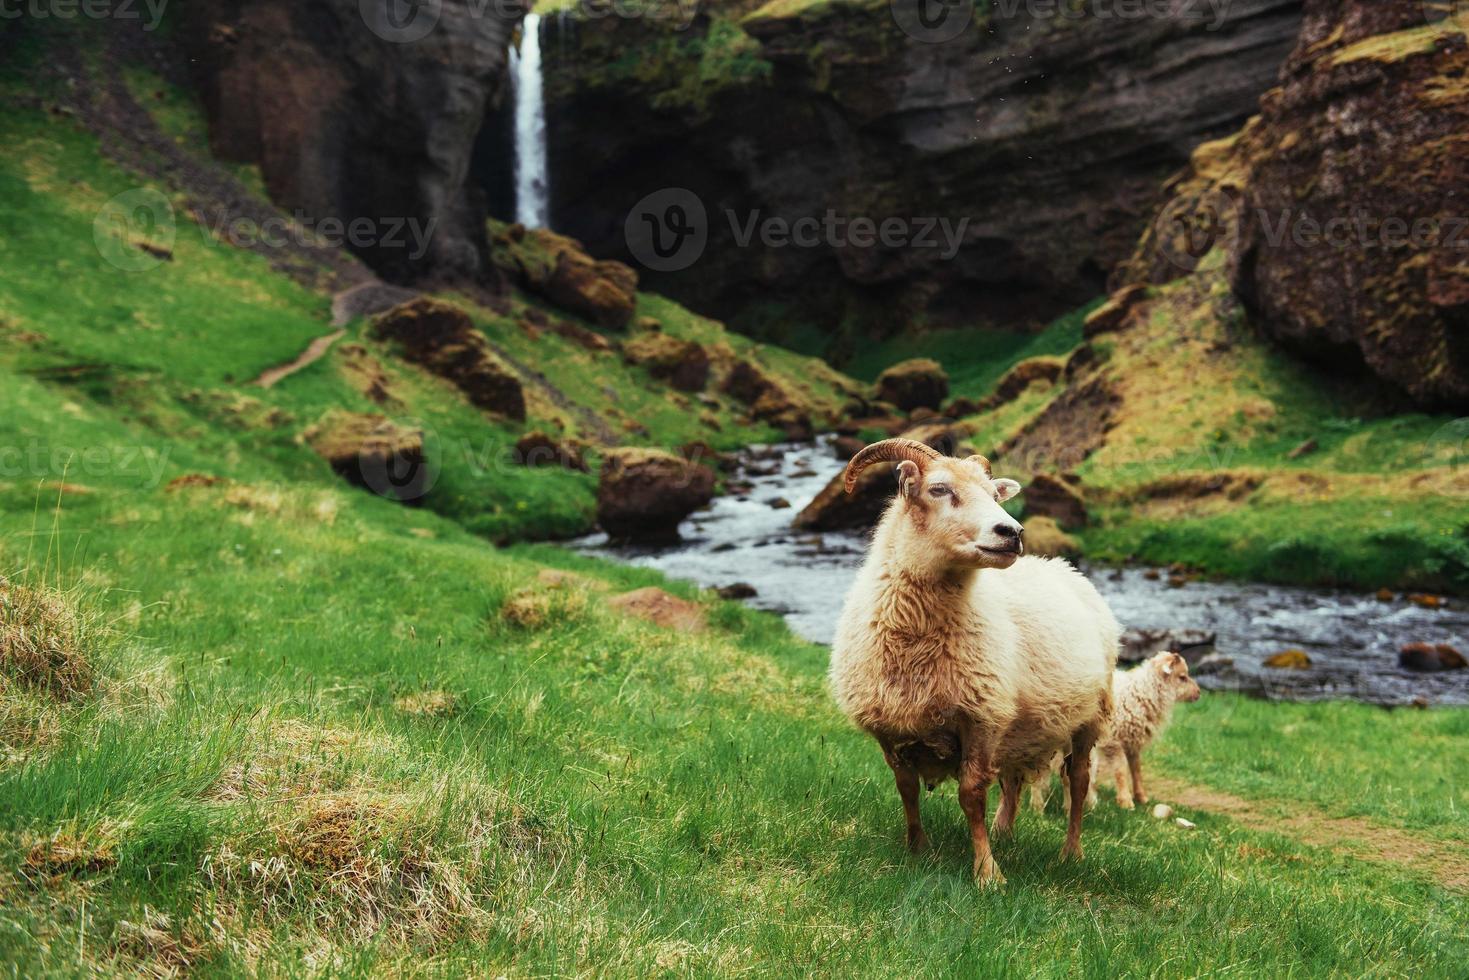 The Icelandic sheep photo